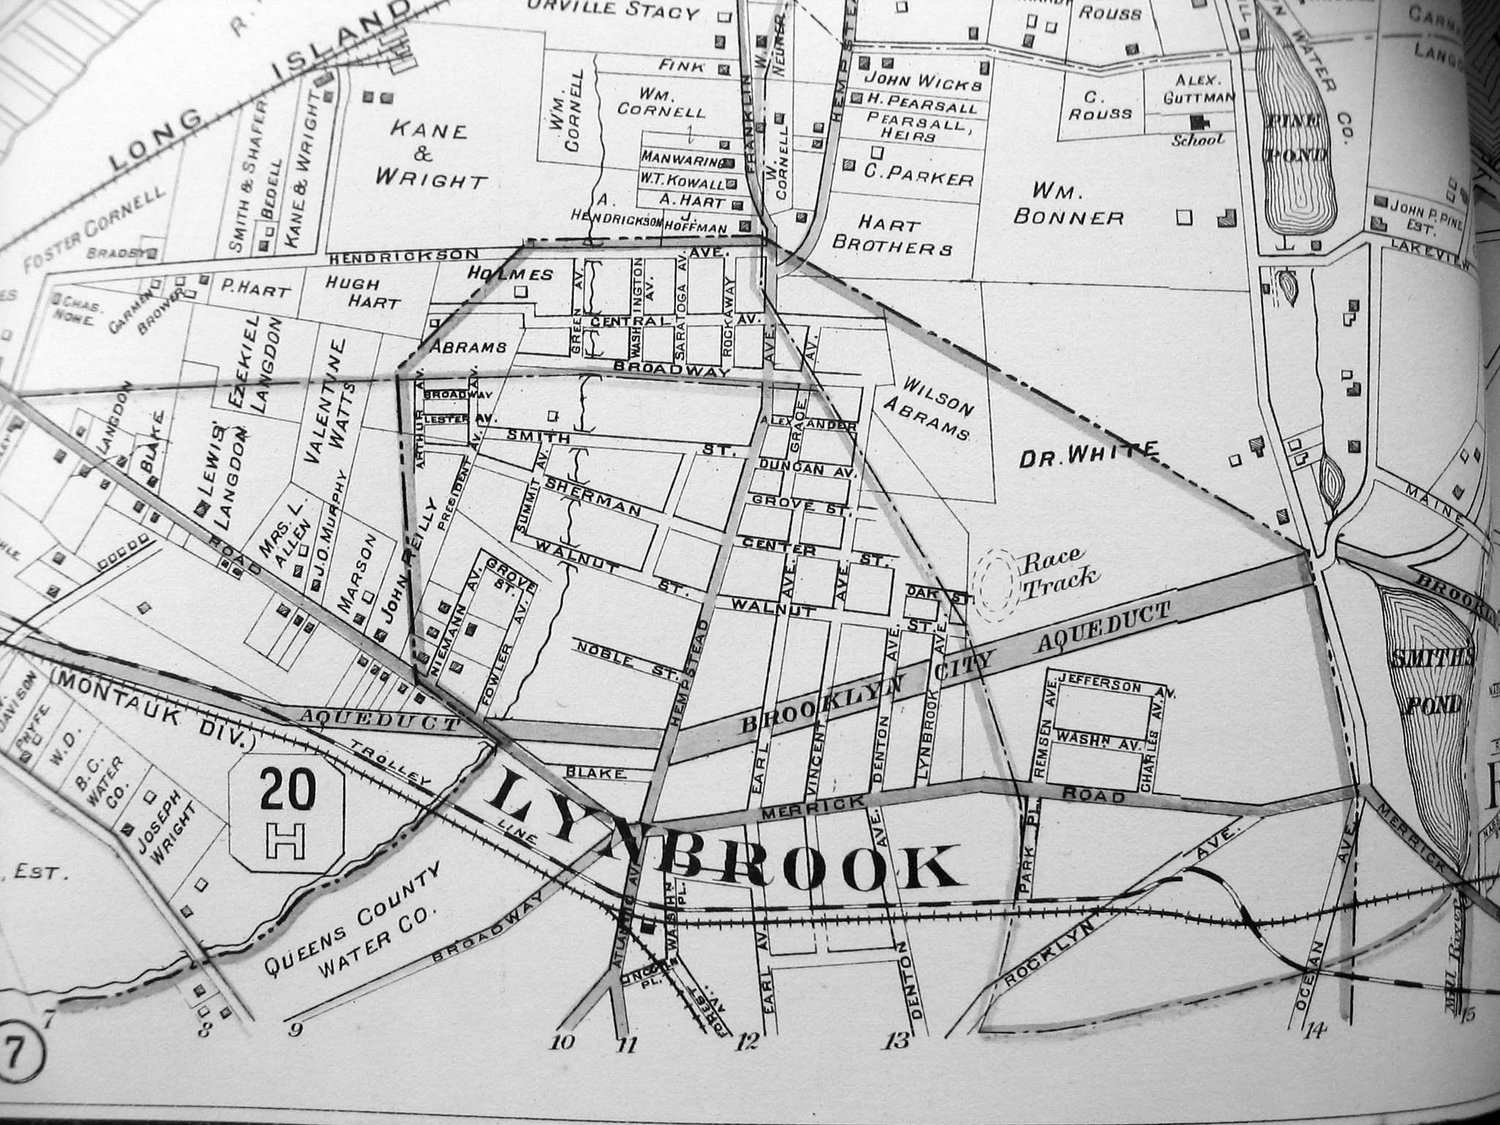 Lynbrook’s racetrack was adjacent to the Brooklyn City Aqueduct (Peninsula Boulevard today).